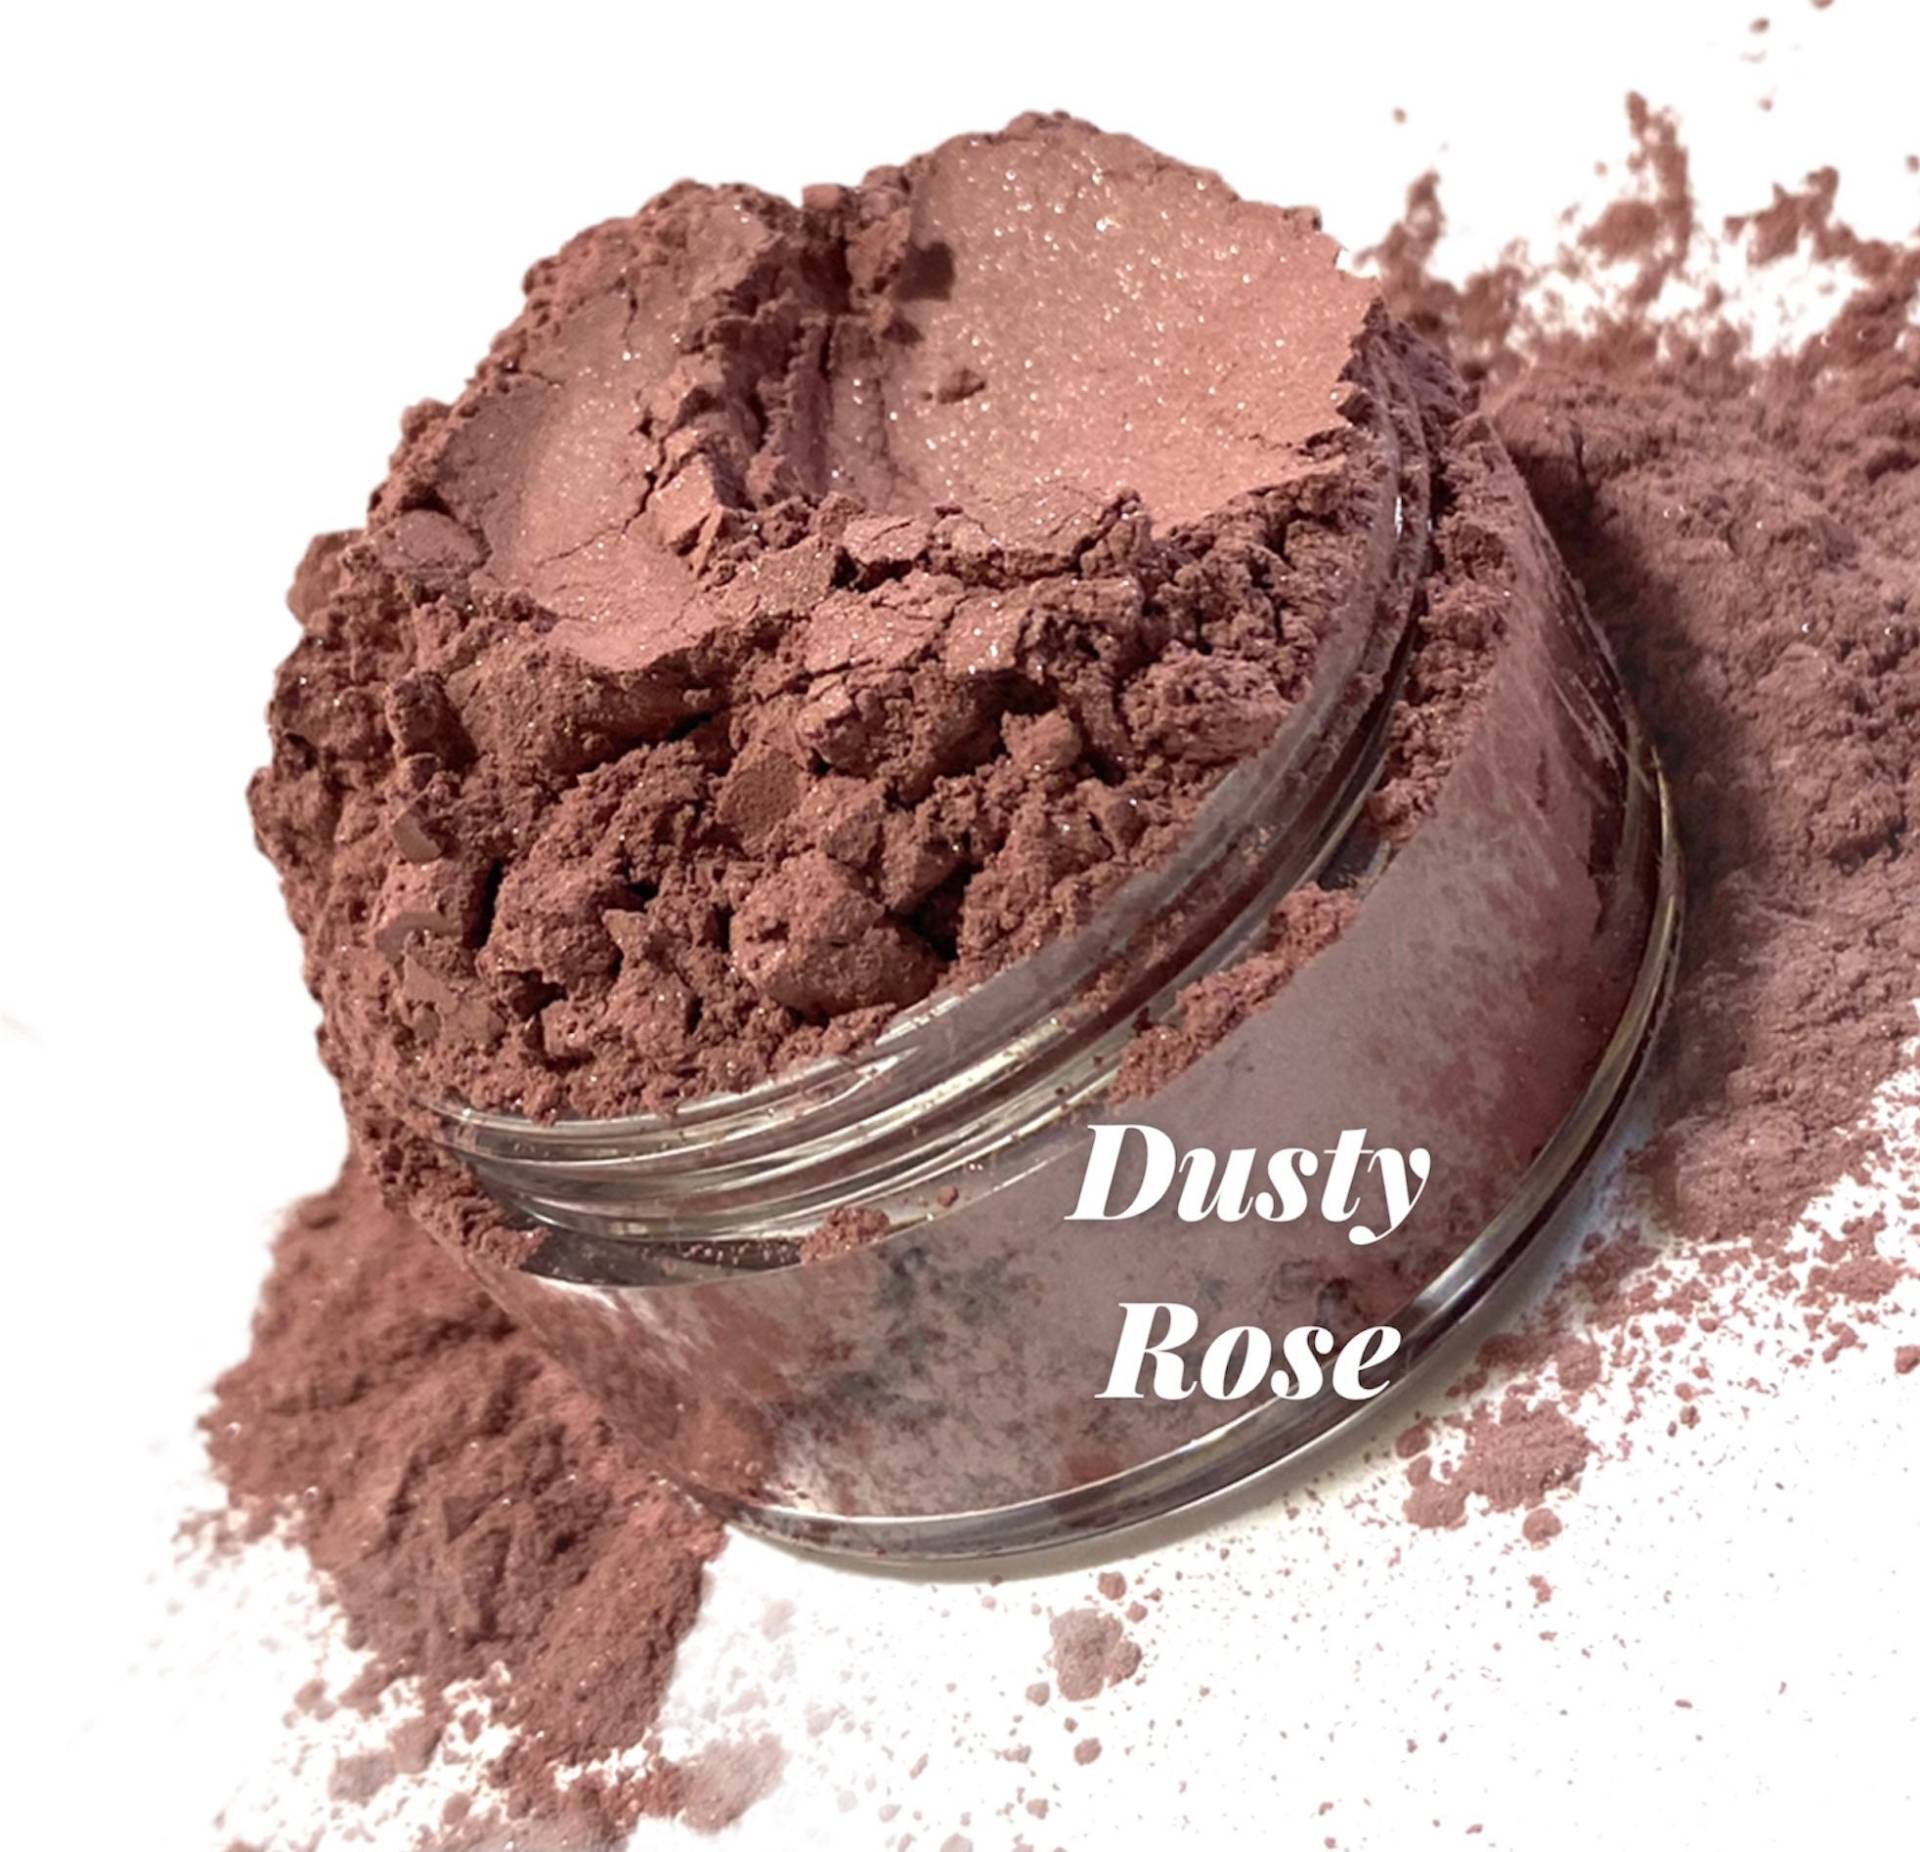 Dusty Rose - Matte Blush Dusty Rosy Pink Seidiges Mineral Makeup Große 30G Sifter Dose Vegan Natural Leicht von CRUSHCOSMETICS